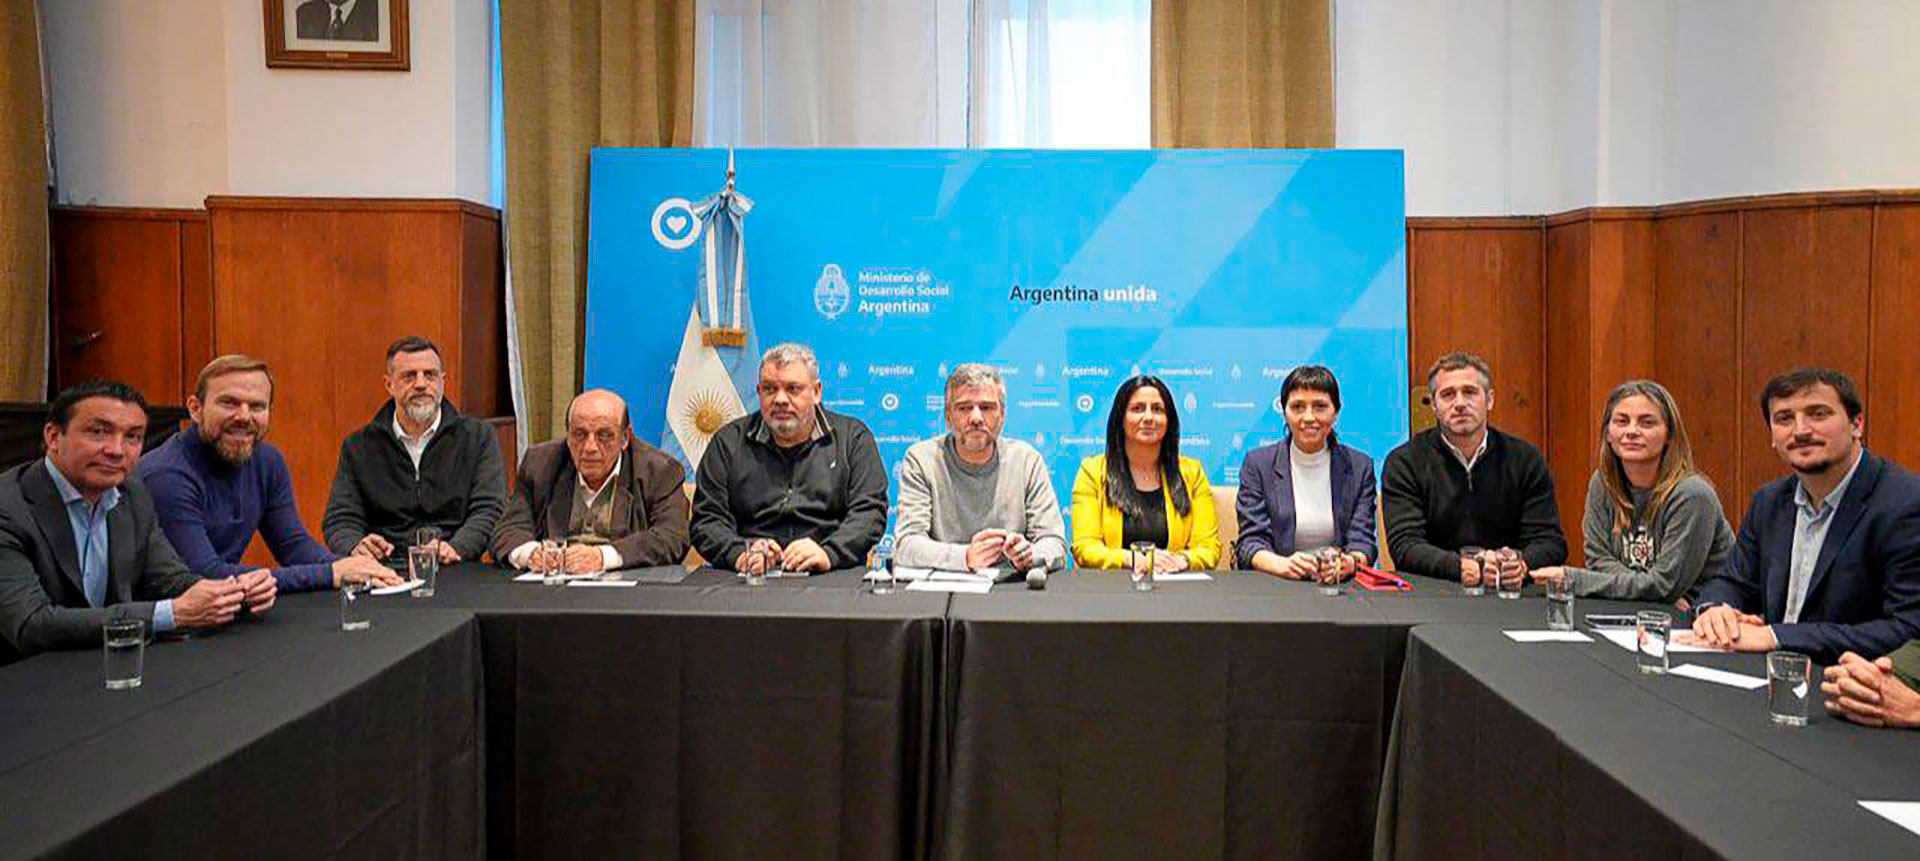 The meeting of the mayors with the minister Juan Zabaleta (Twitter: @MayraSMendoza)